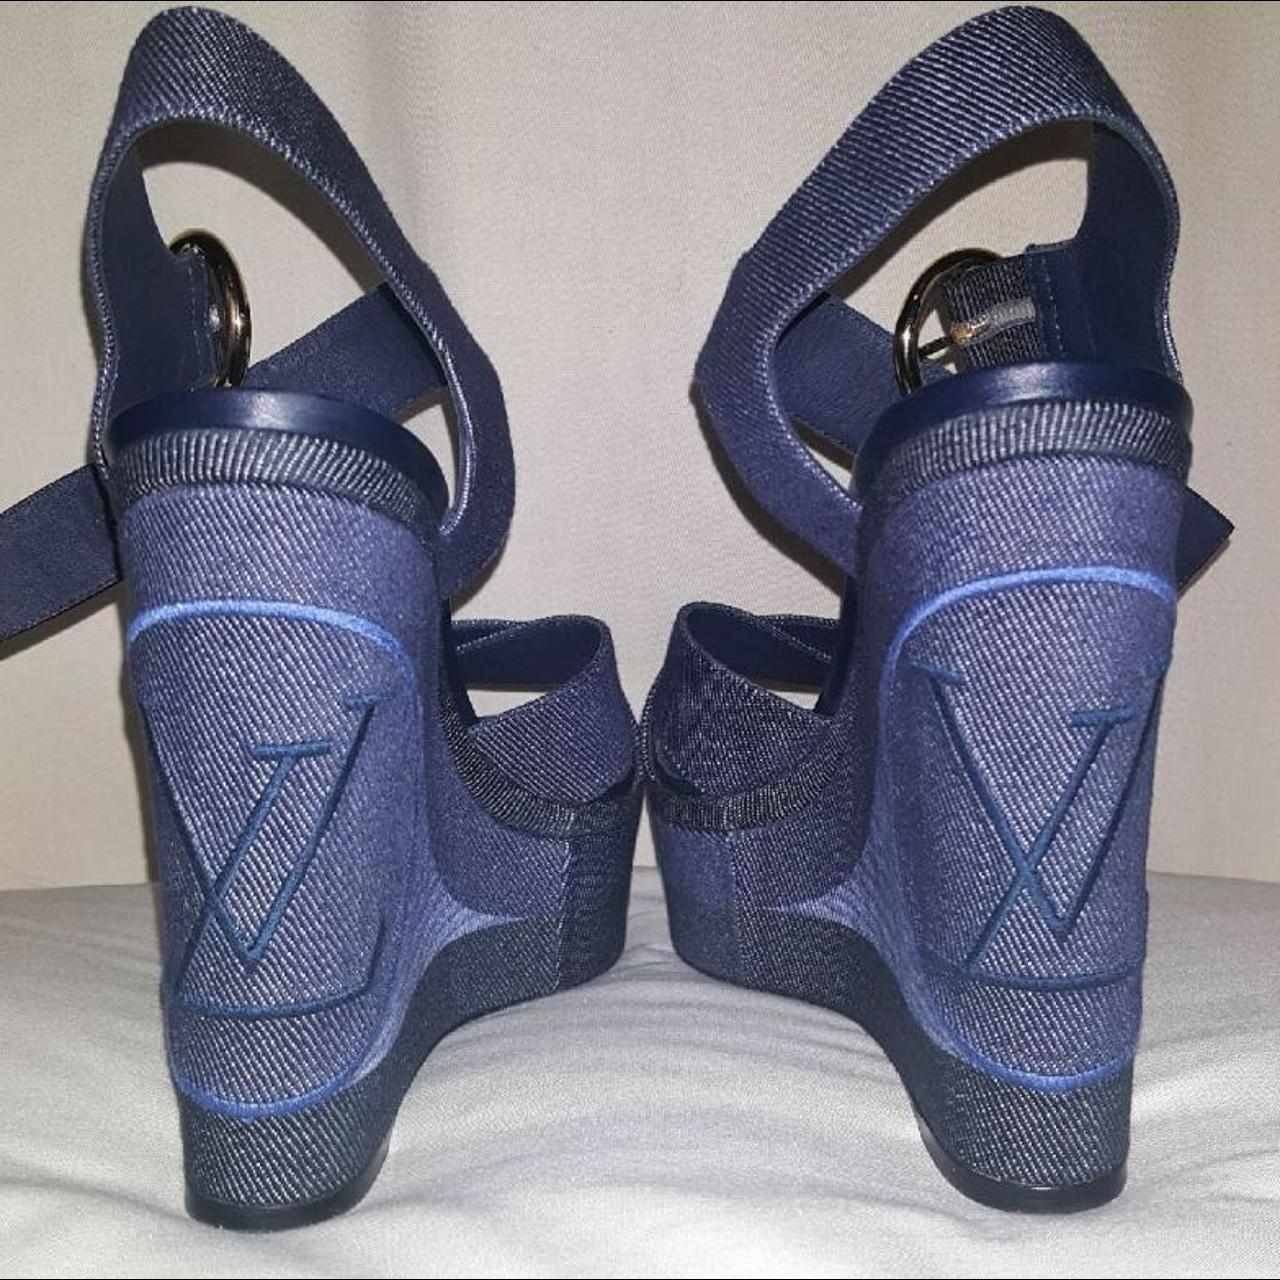 Rare Louis Vuitton Blue Denim & Leather W/ Wood Wedge Sandals Shoes  9013-38